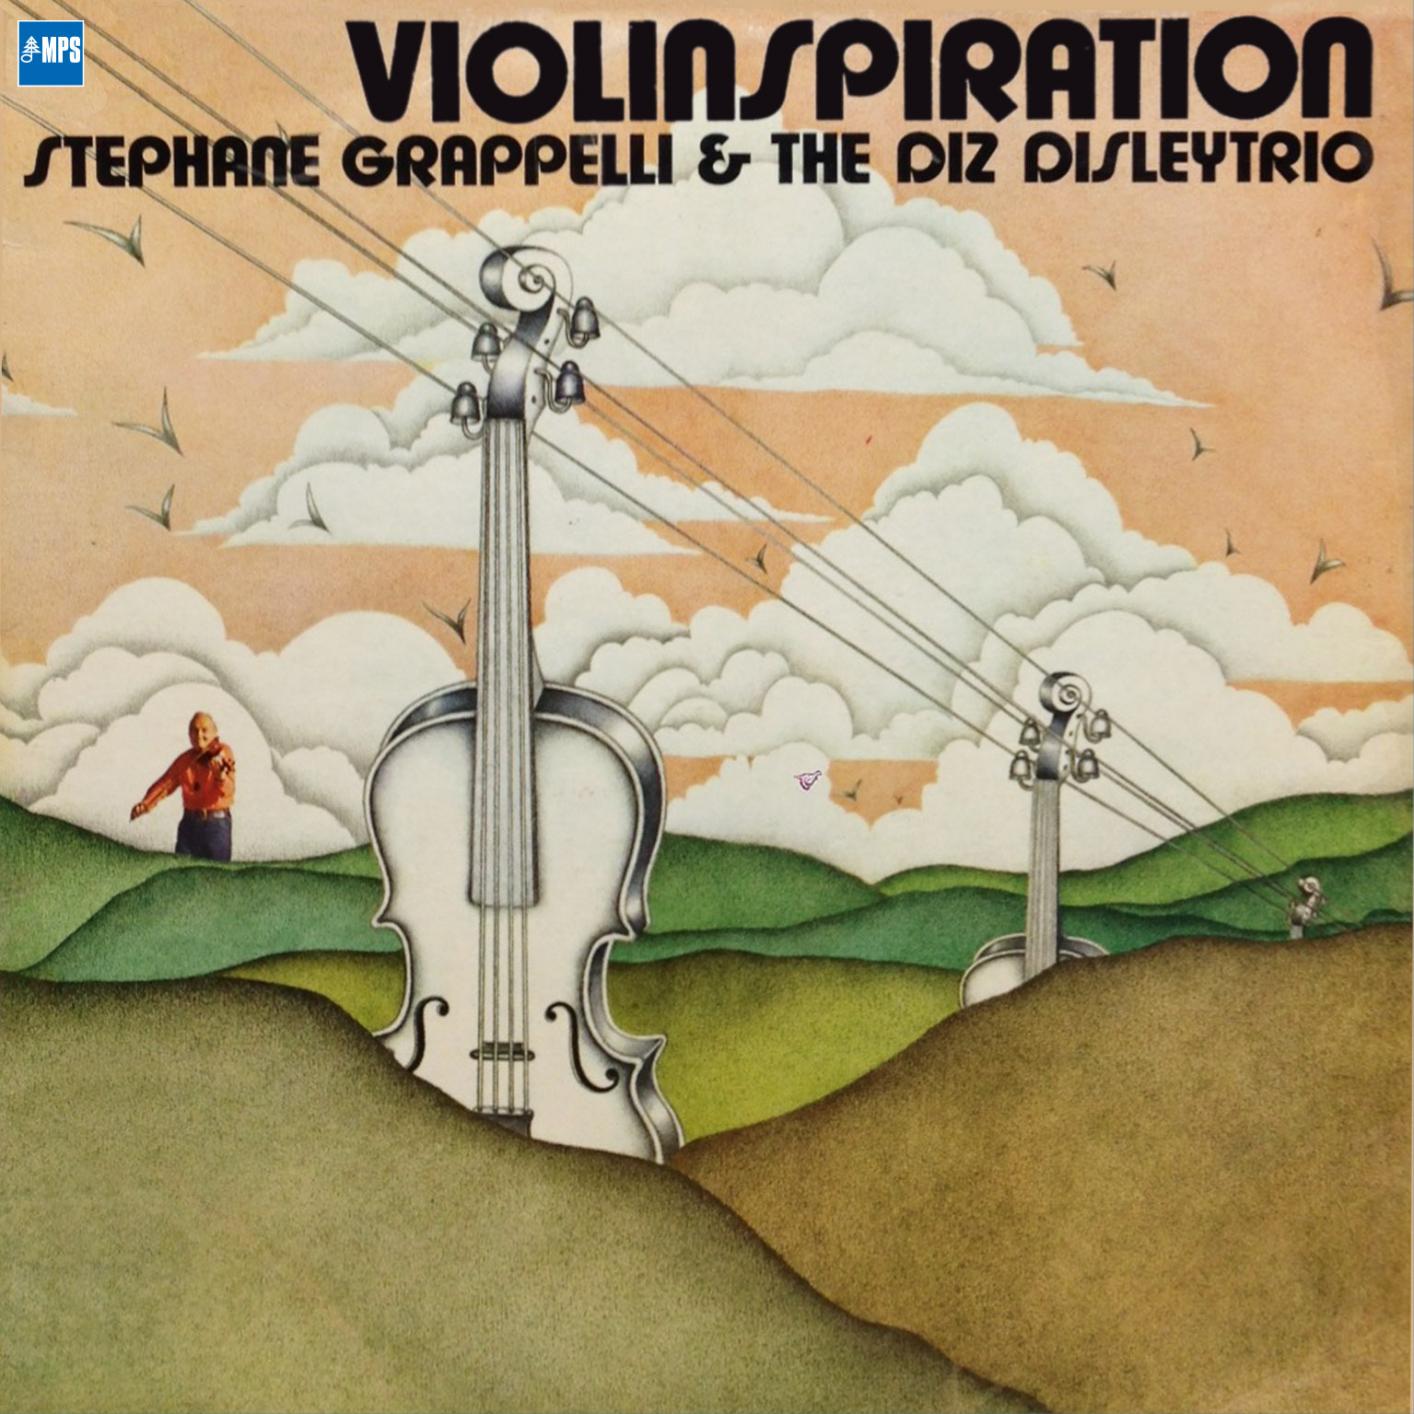 Stephane Grappelli & The Diz Disley Trio - Violinspiration (1975/2015) [HighResAudio FLAC 24bit/88,2kHz]